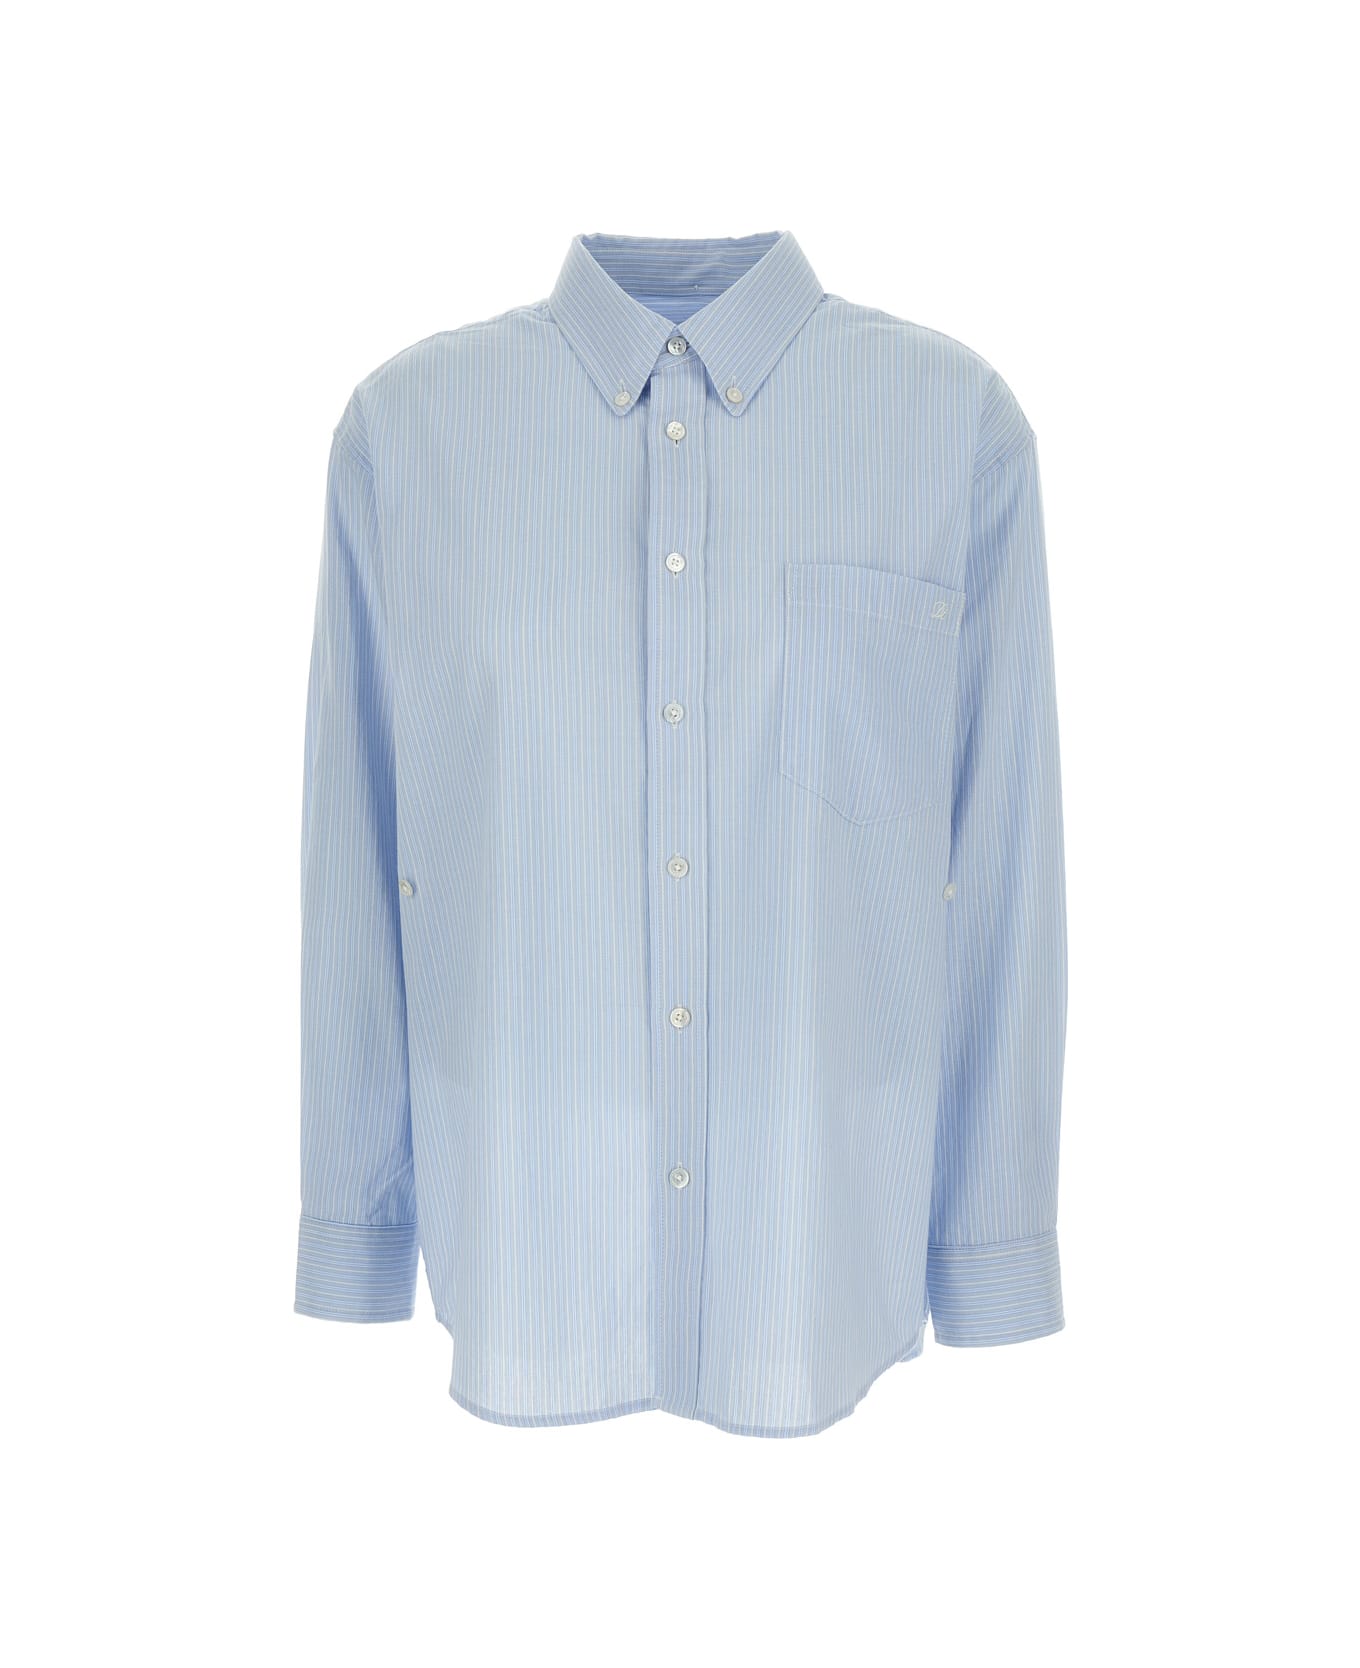 Dunst Light-blue Striped Oversize Shirt In Cotton Unisex - Light blue